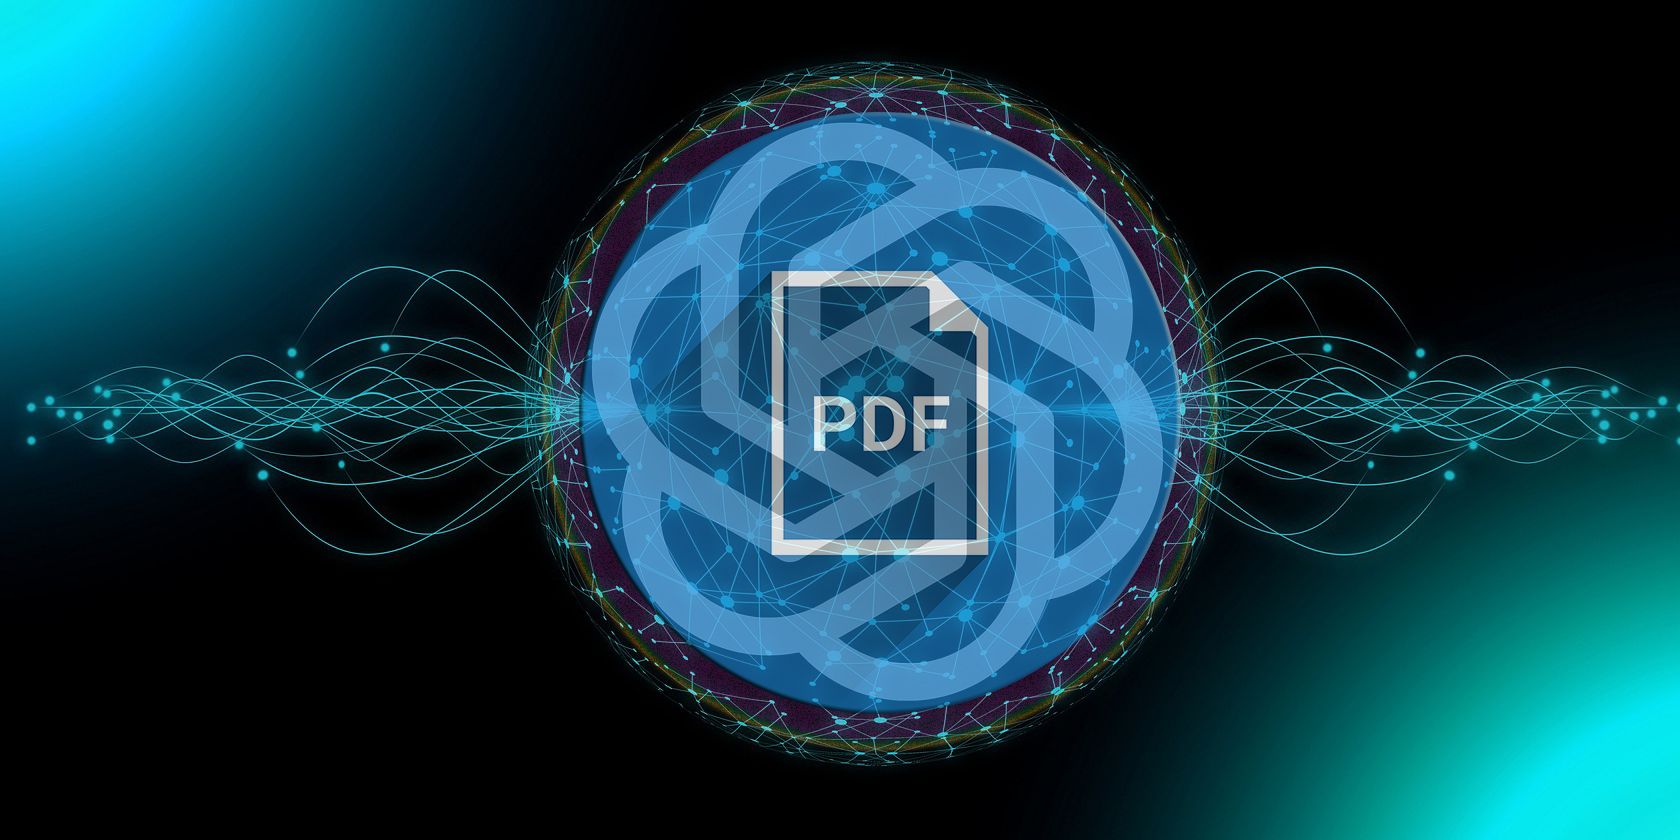 ChatGPT logo with PDF icon overlaid